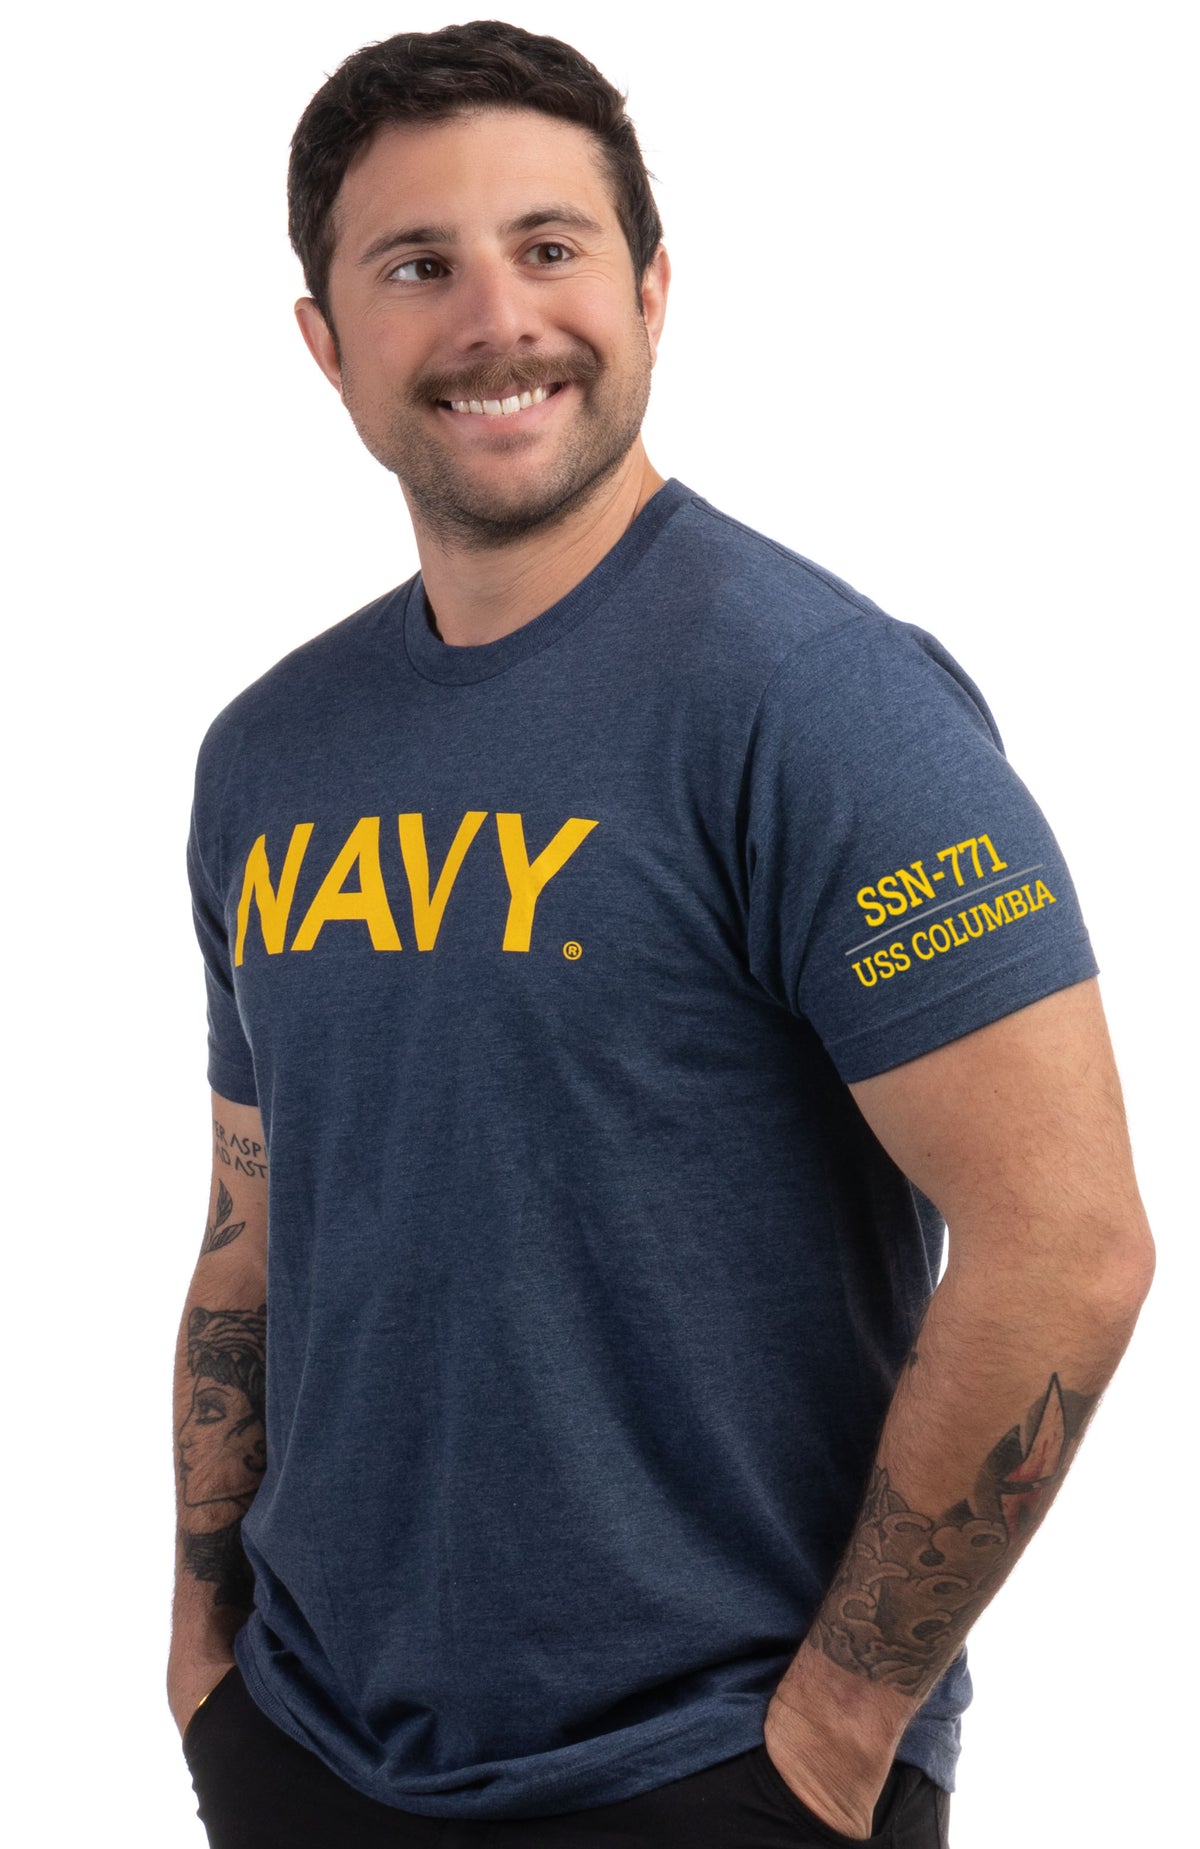 USS Columbia, SSN-771 | U.S. Navy Sailor Veteran USN United States Naval T-shirt for Men Women